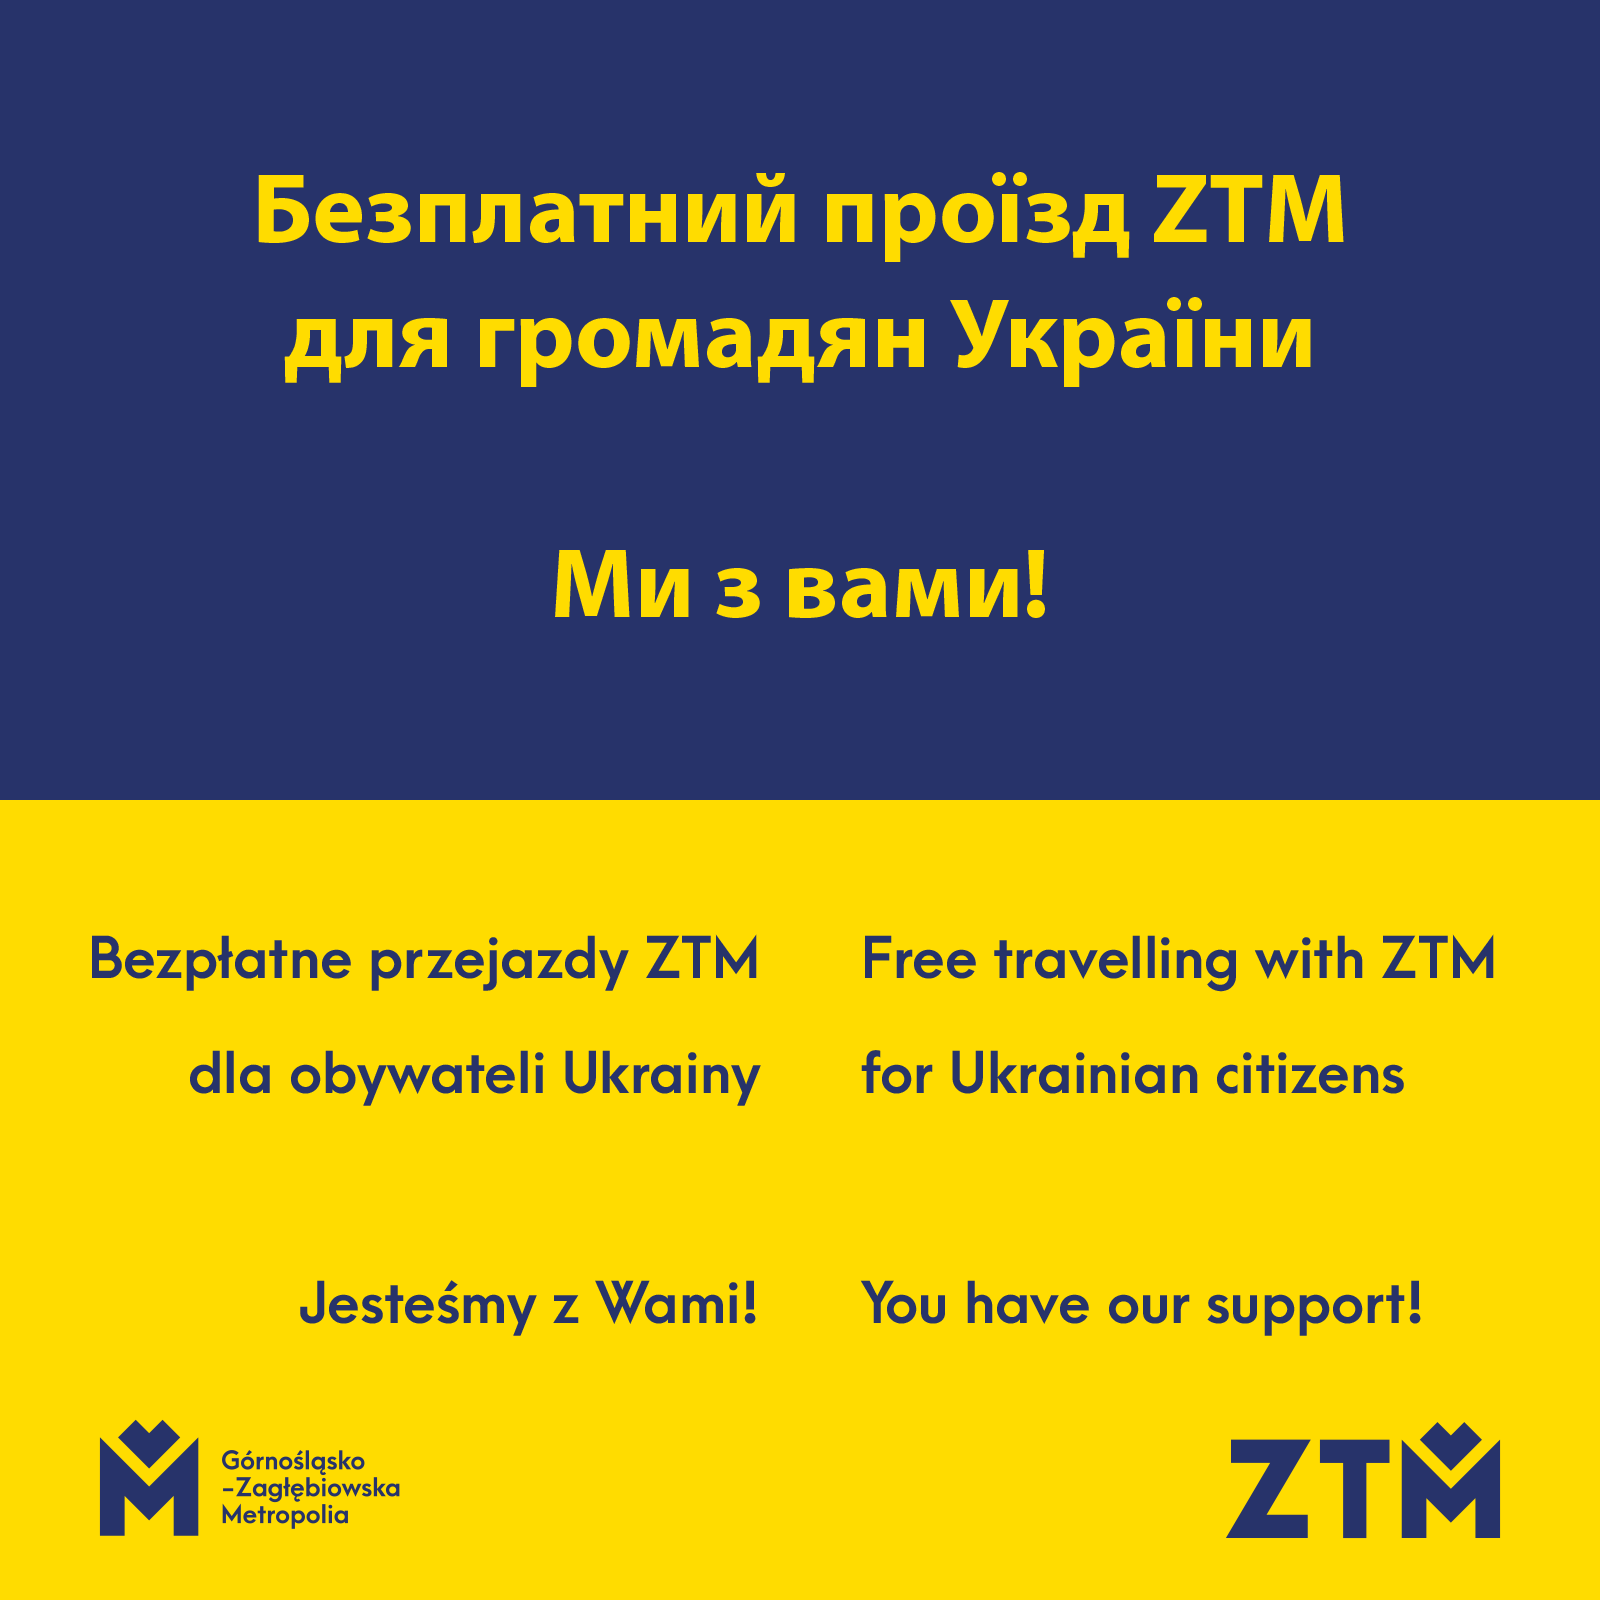 Bezpłatny transport dla uchodźców z Ukrainy / Безкоштовний транспорт для біженців з України